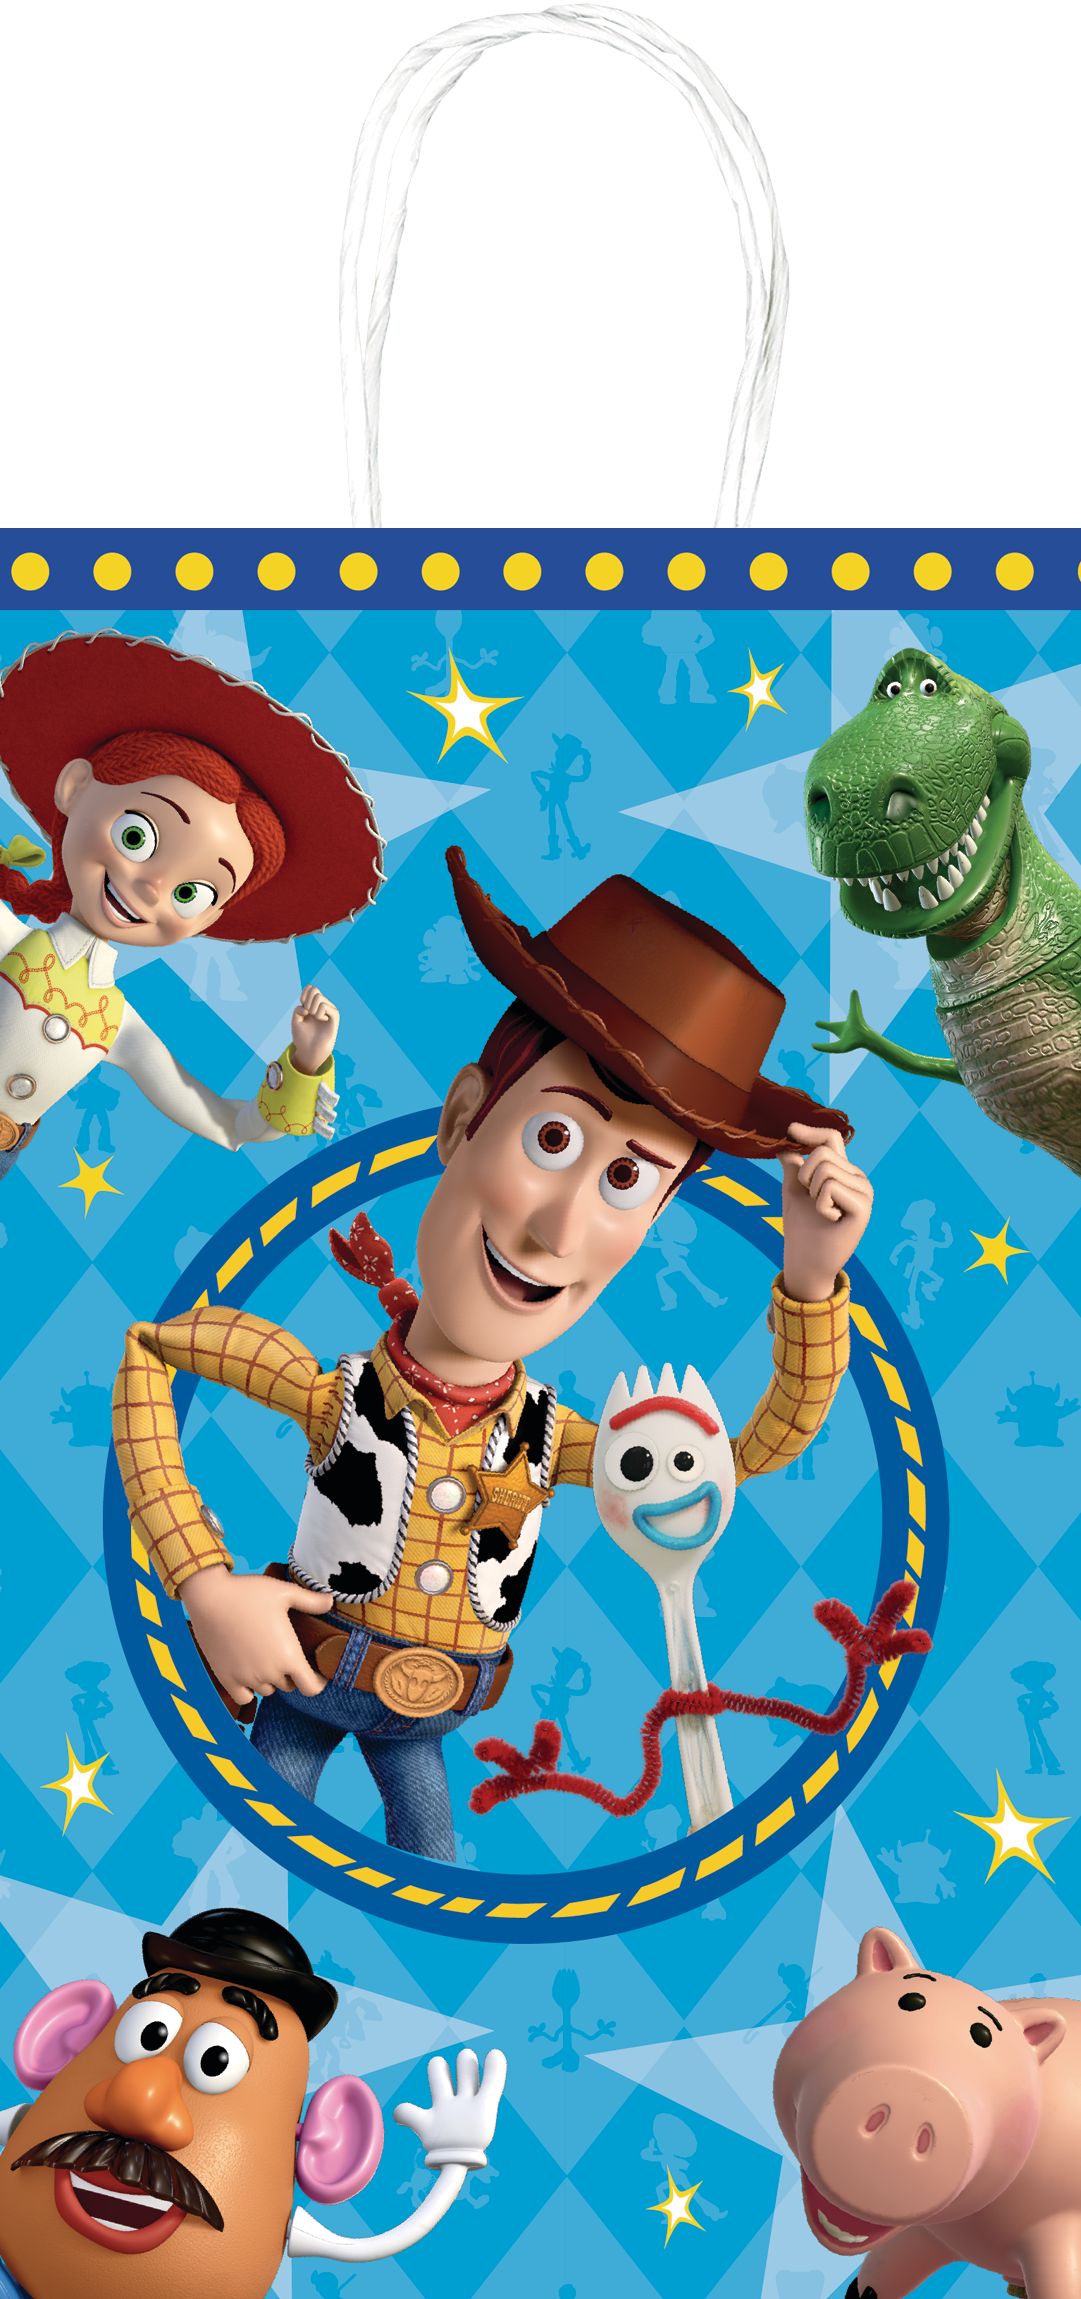 Disney Pixar Toy Story Roundup Fun Woody Wholesale